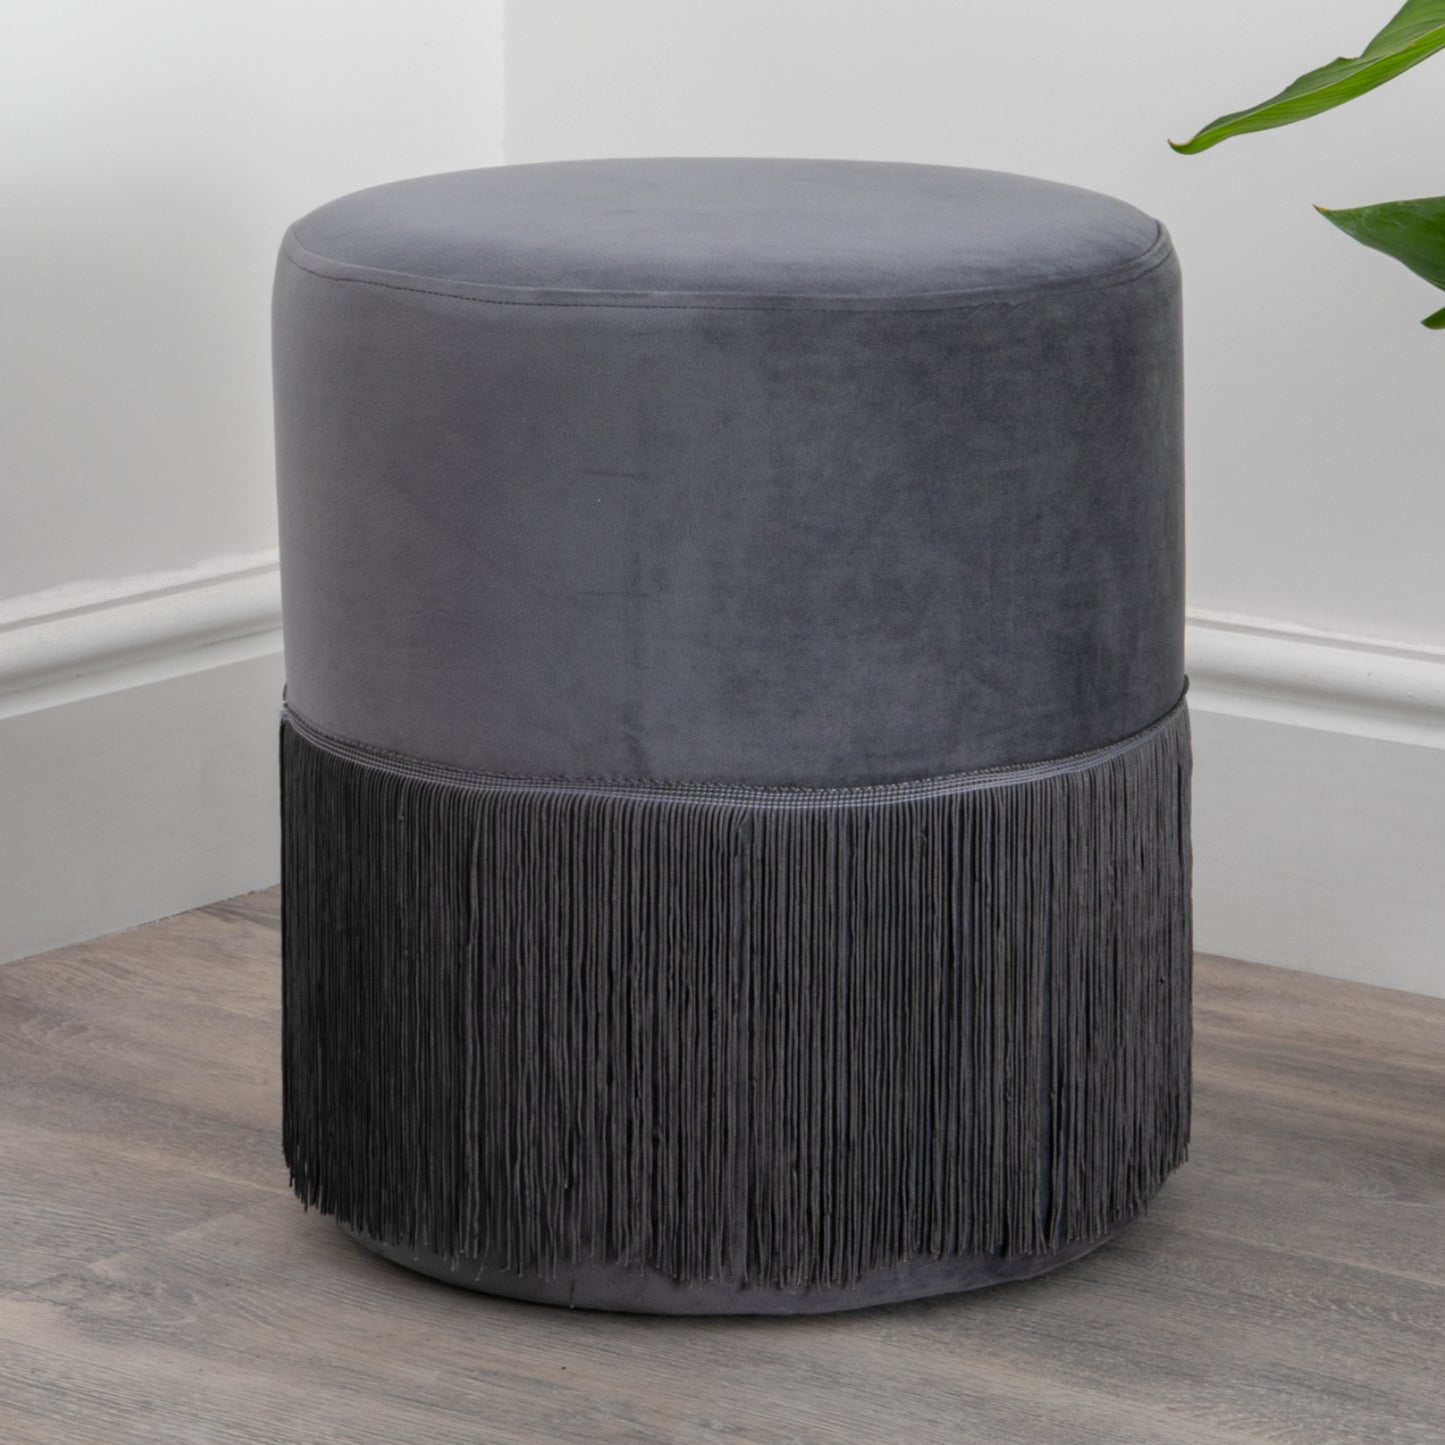 Round tassles stool by Native